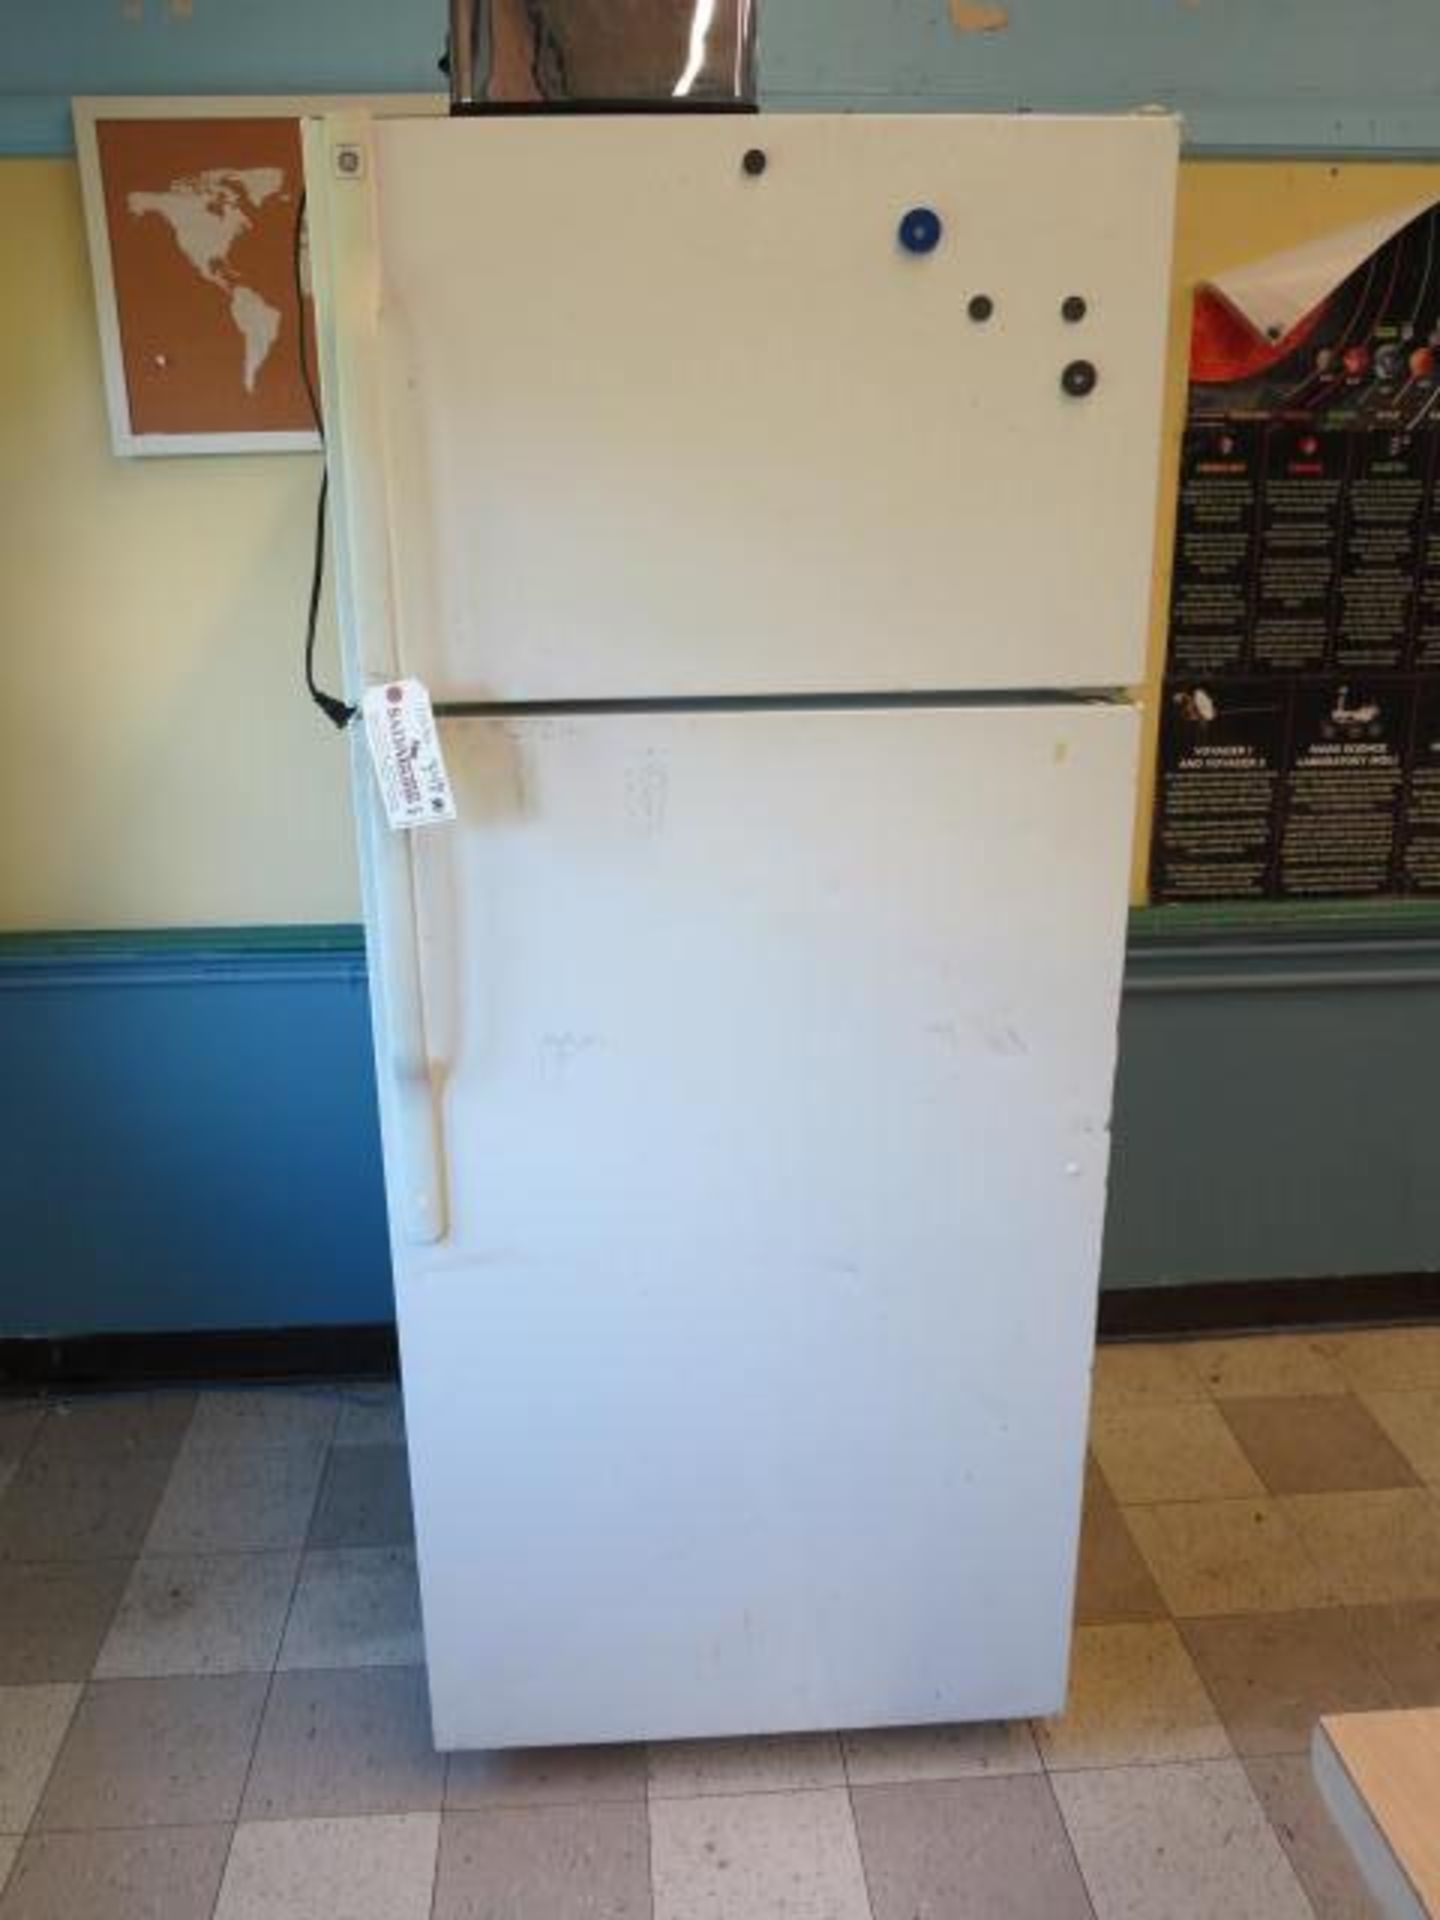 GE Refrigerator Model GTS18GBSARWW 28'' Top Freezer/Refrigerator Located in Room 11 on 2nd Floor